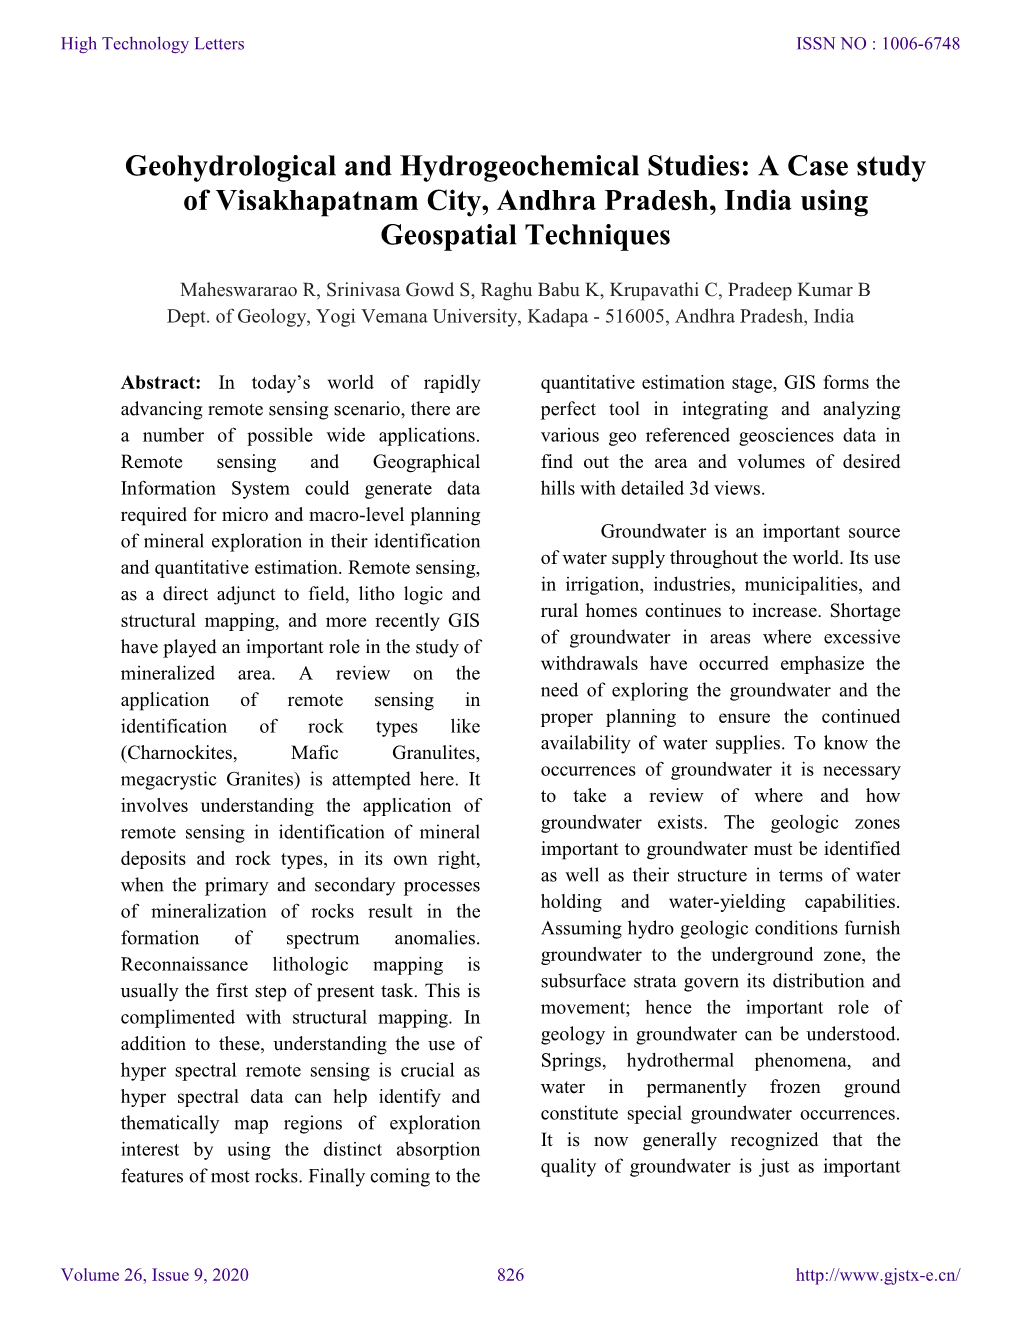 A Case Study of Visakhapatnam City, Andhra Pradesh, India Using Geospatial Techniques